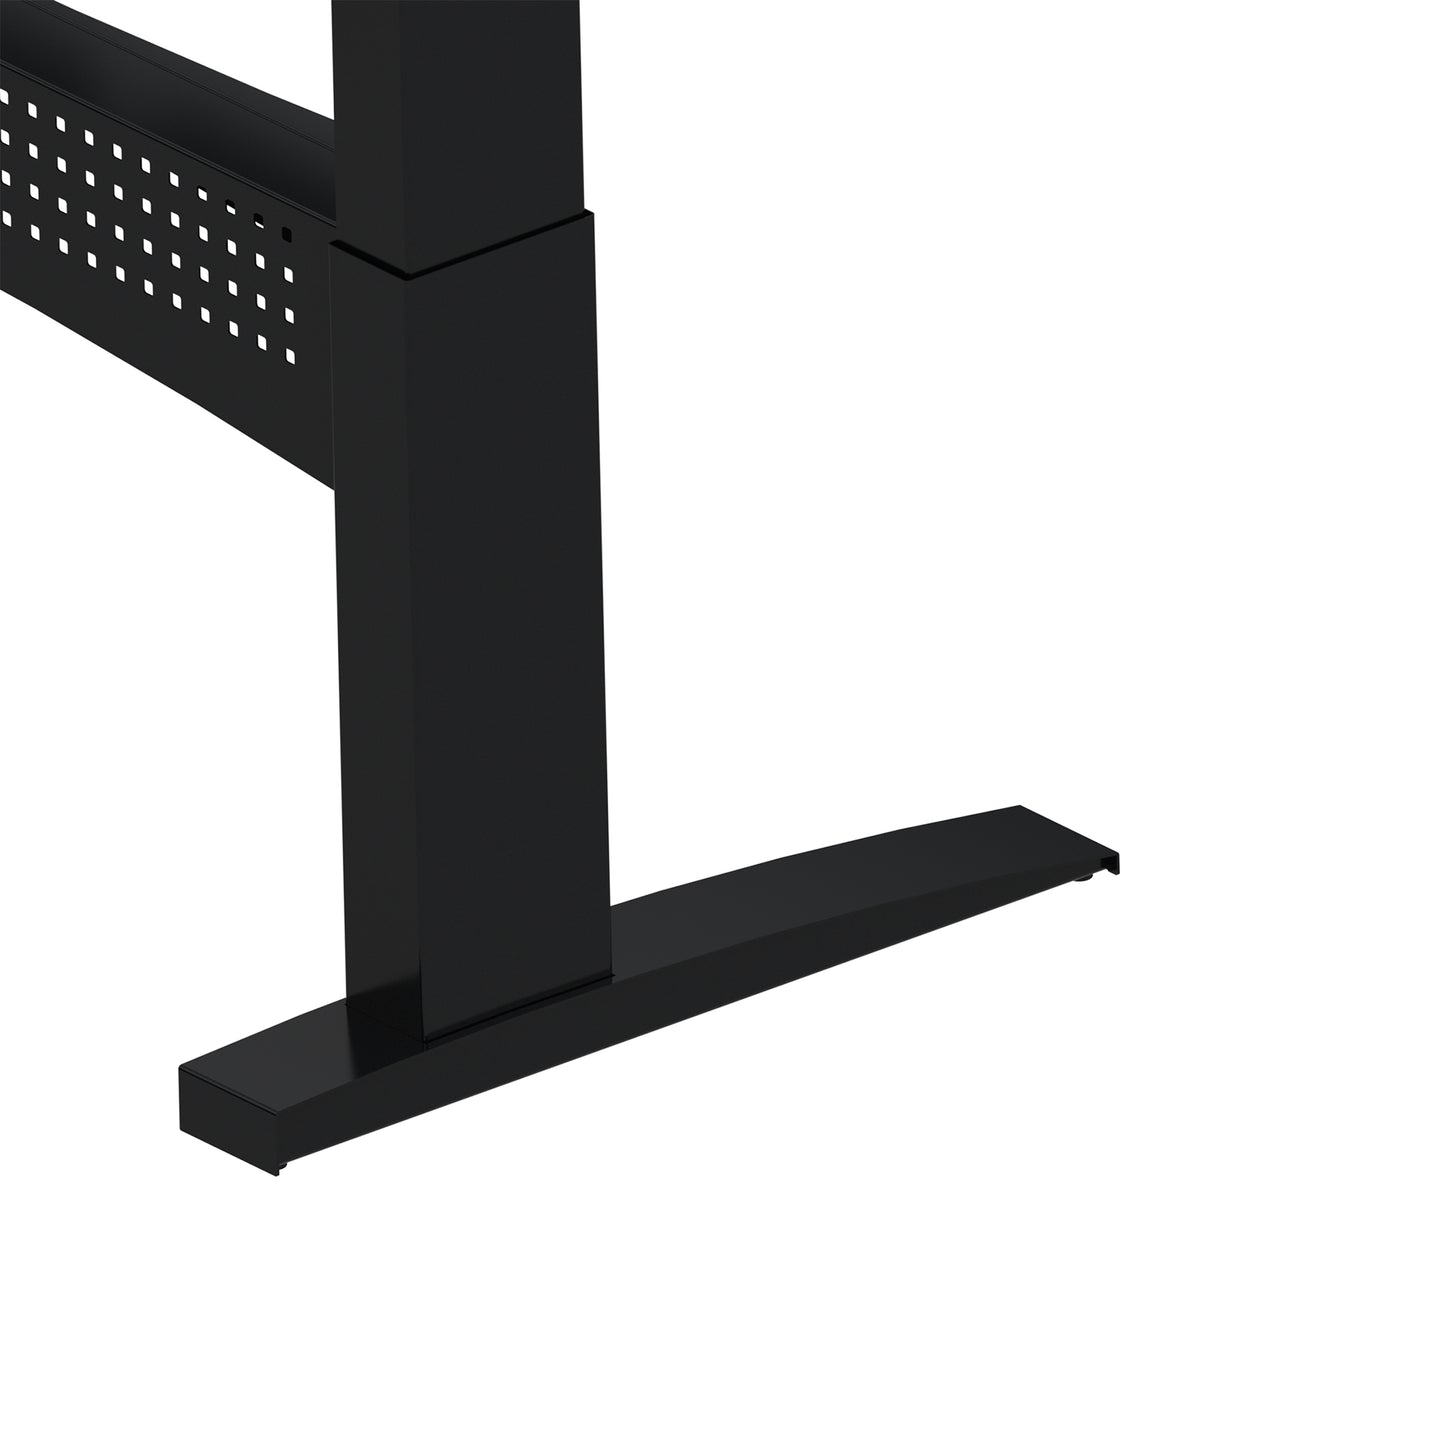 ConSet 501-11 Rectangular Height Adjustable Sit Stand Desk